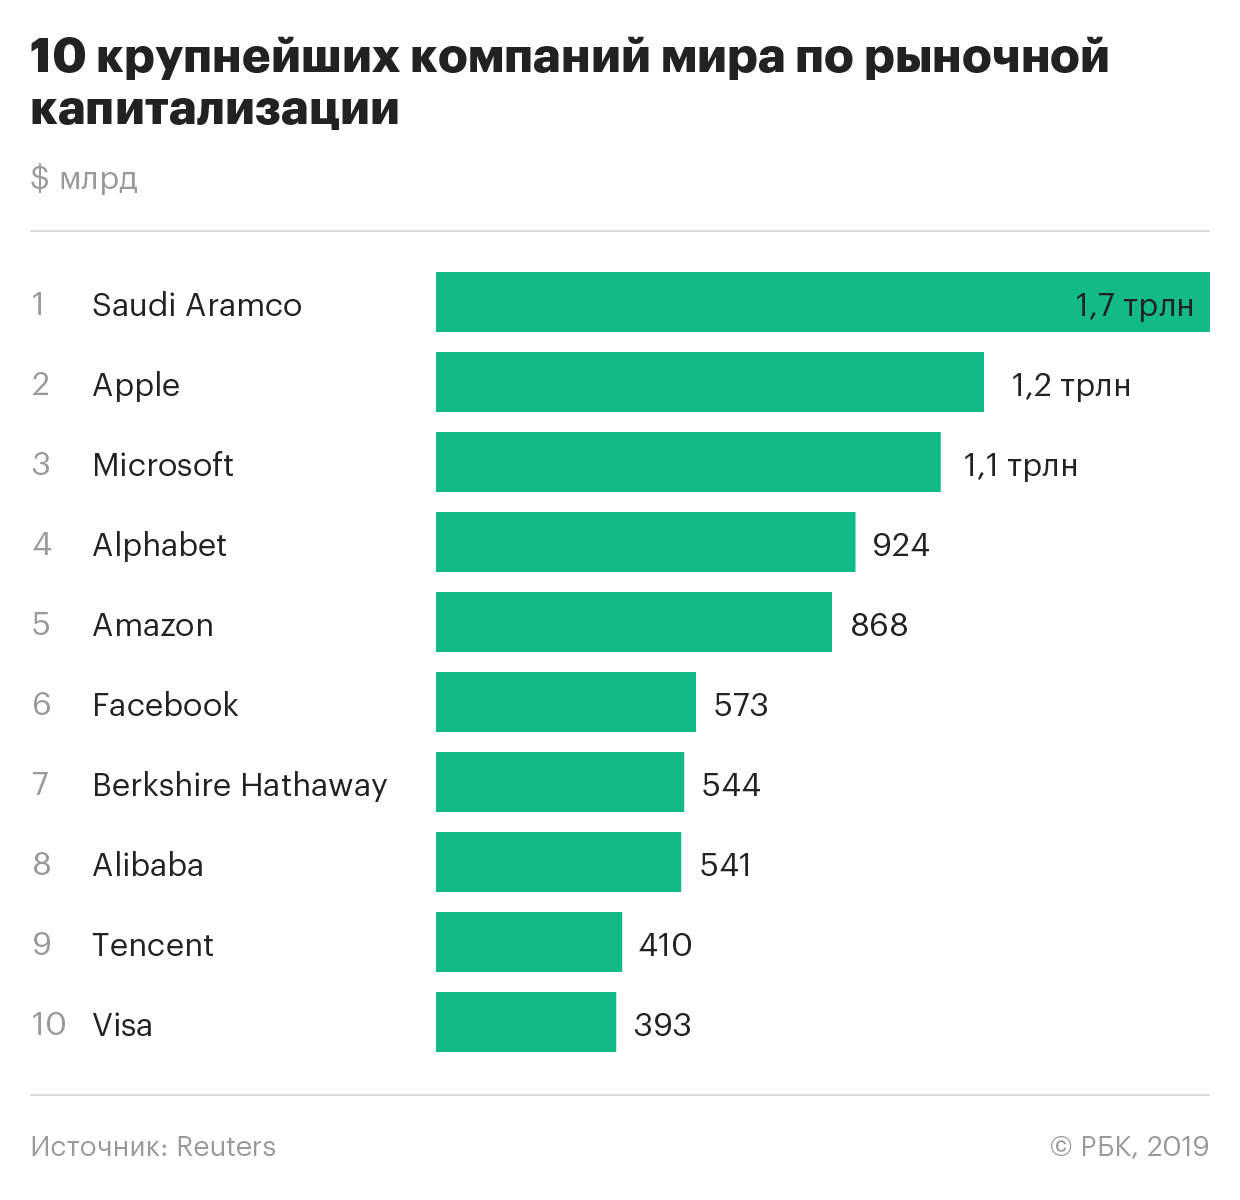 Список 200 богатейших людей россии 2021 года по версии forbes - forbes list of russia's 200 richest people 2021 - abcdef.wiki